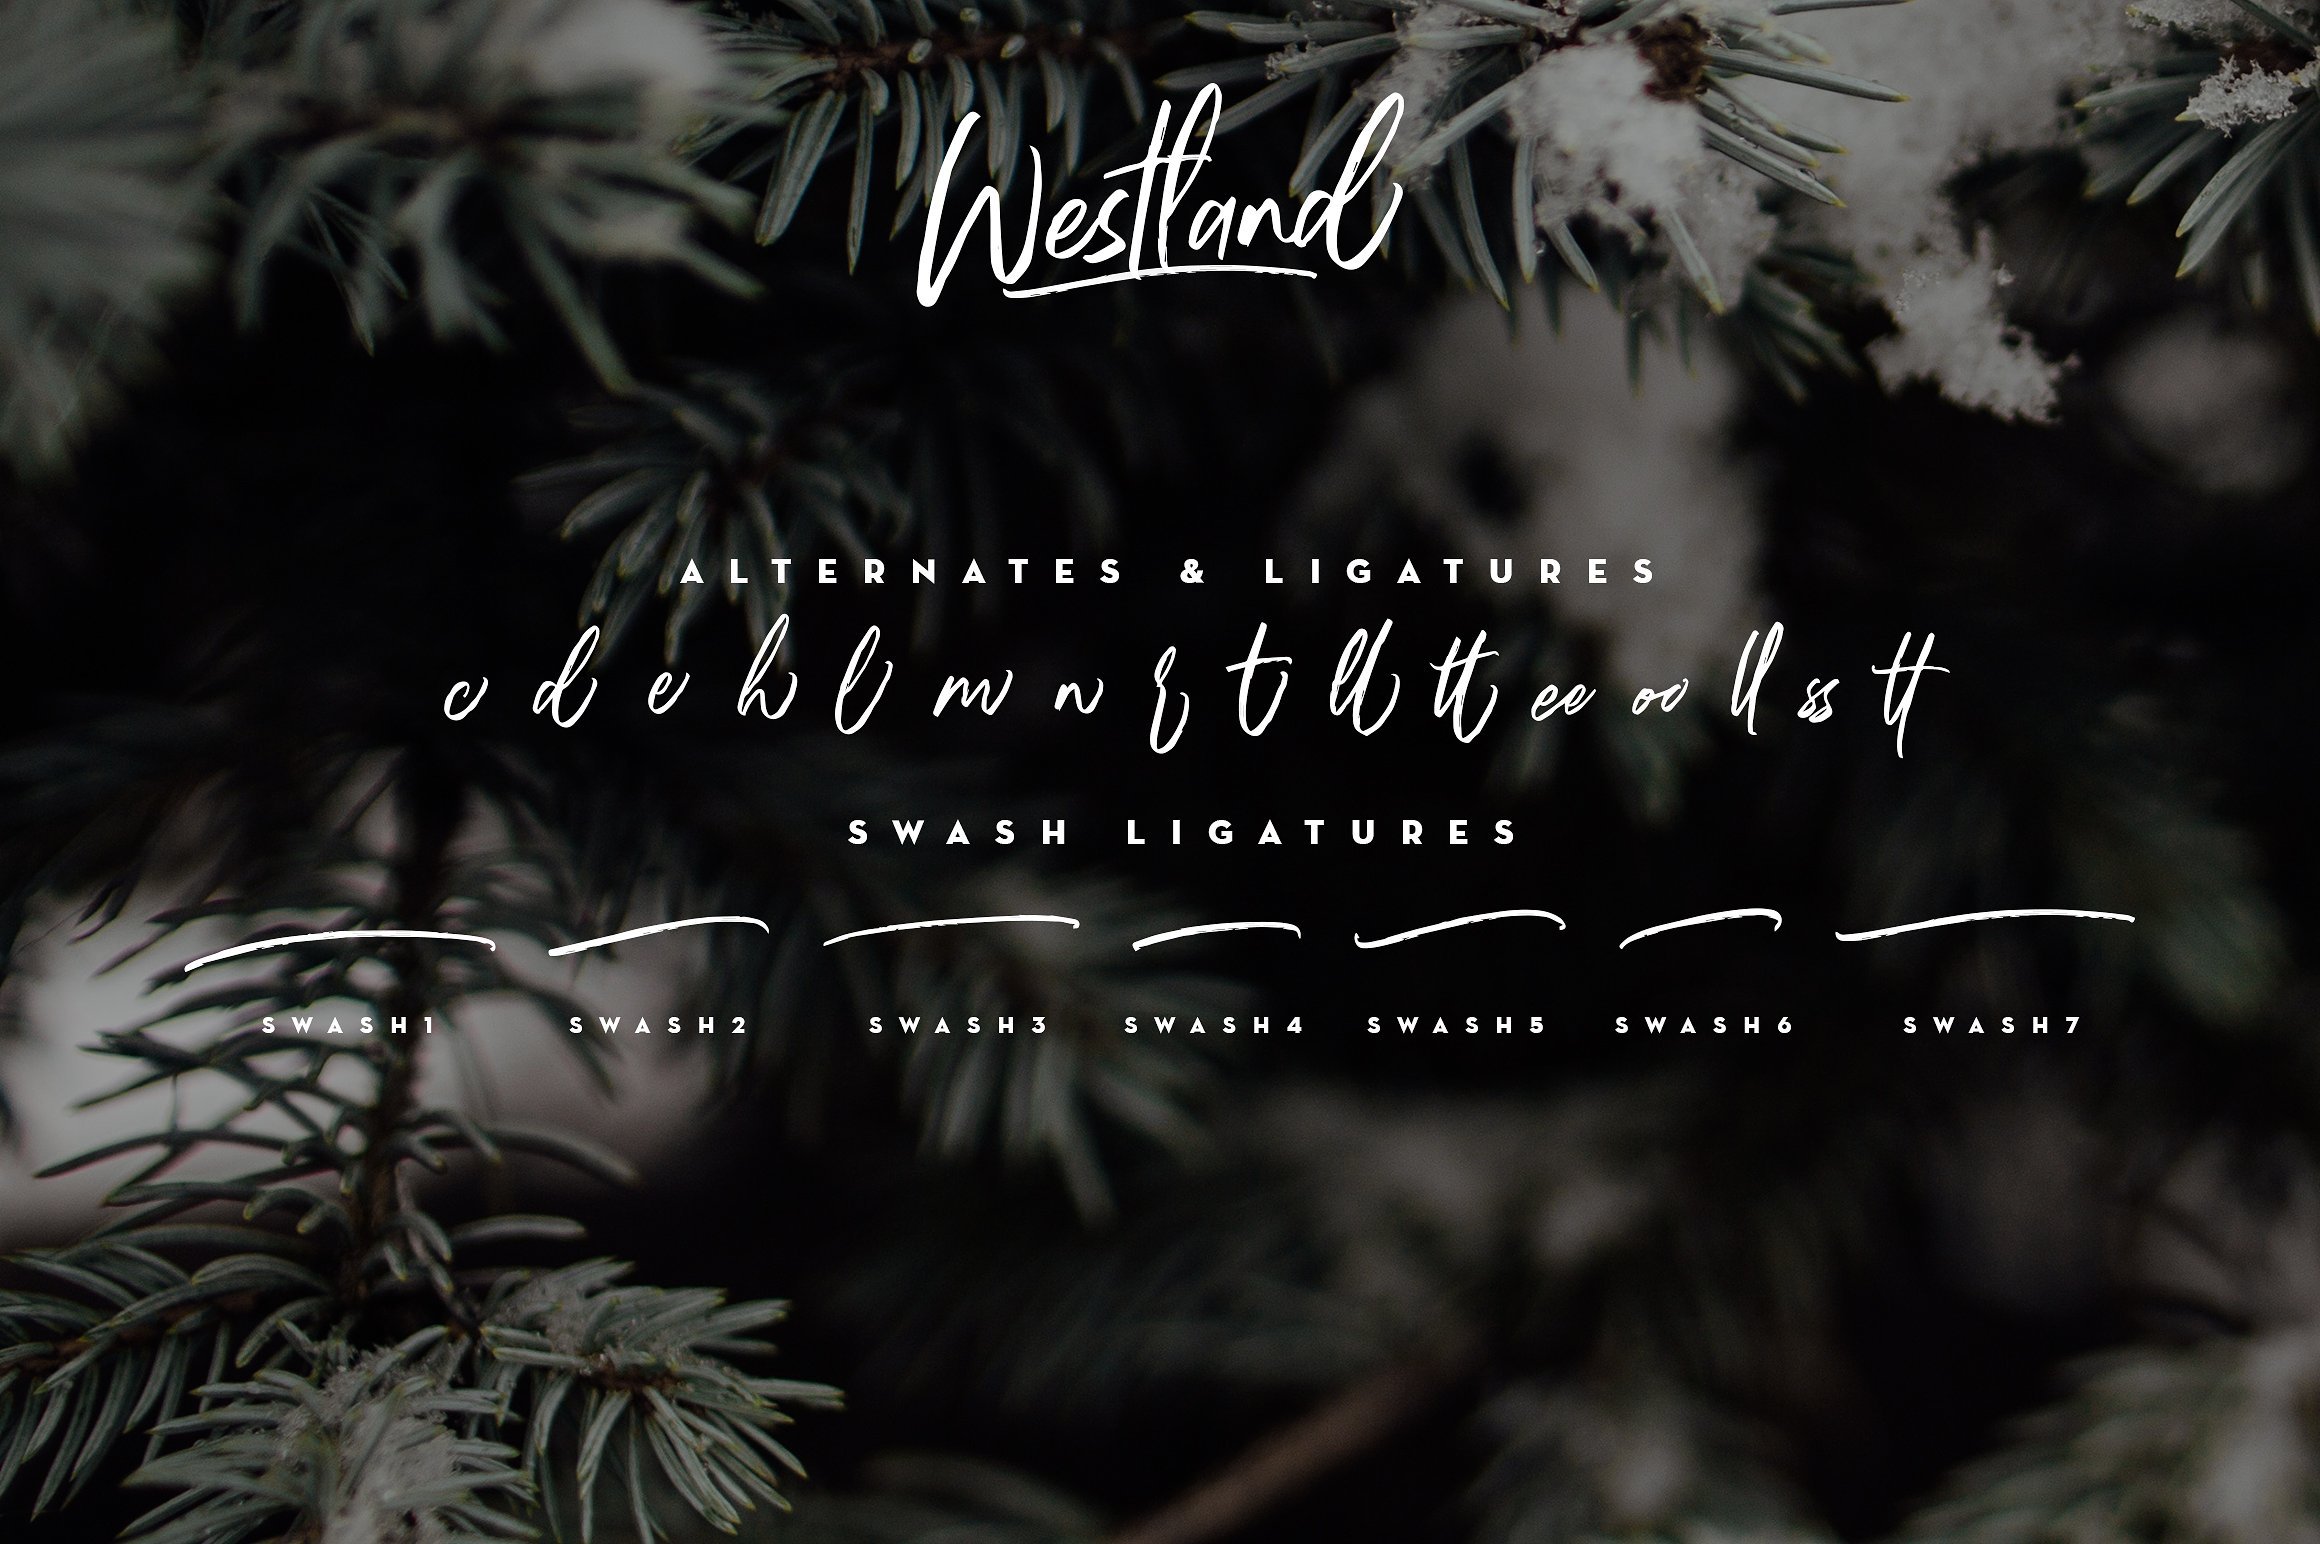 Westland Handstylish Font